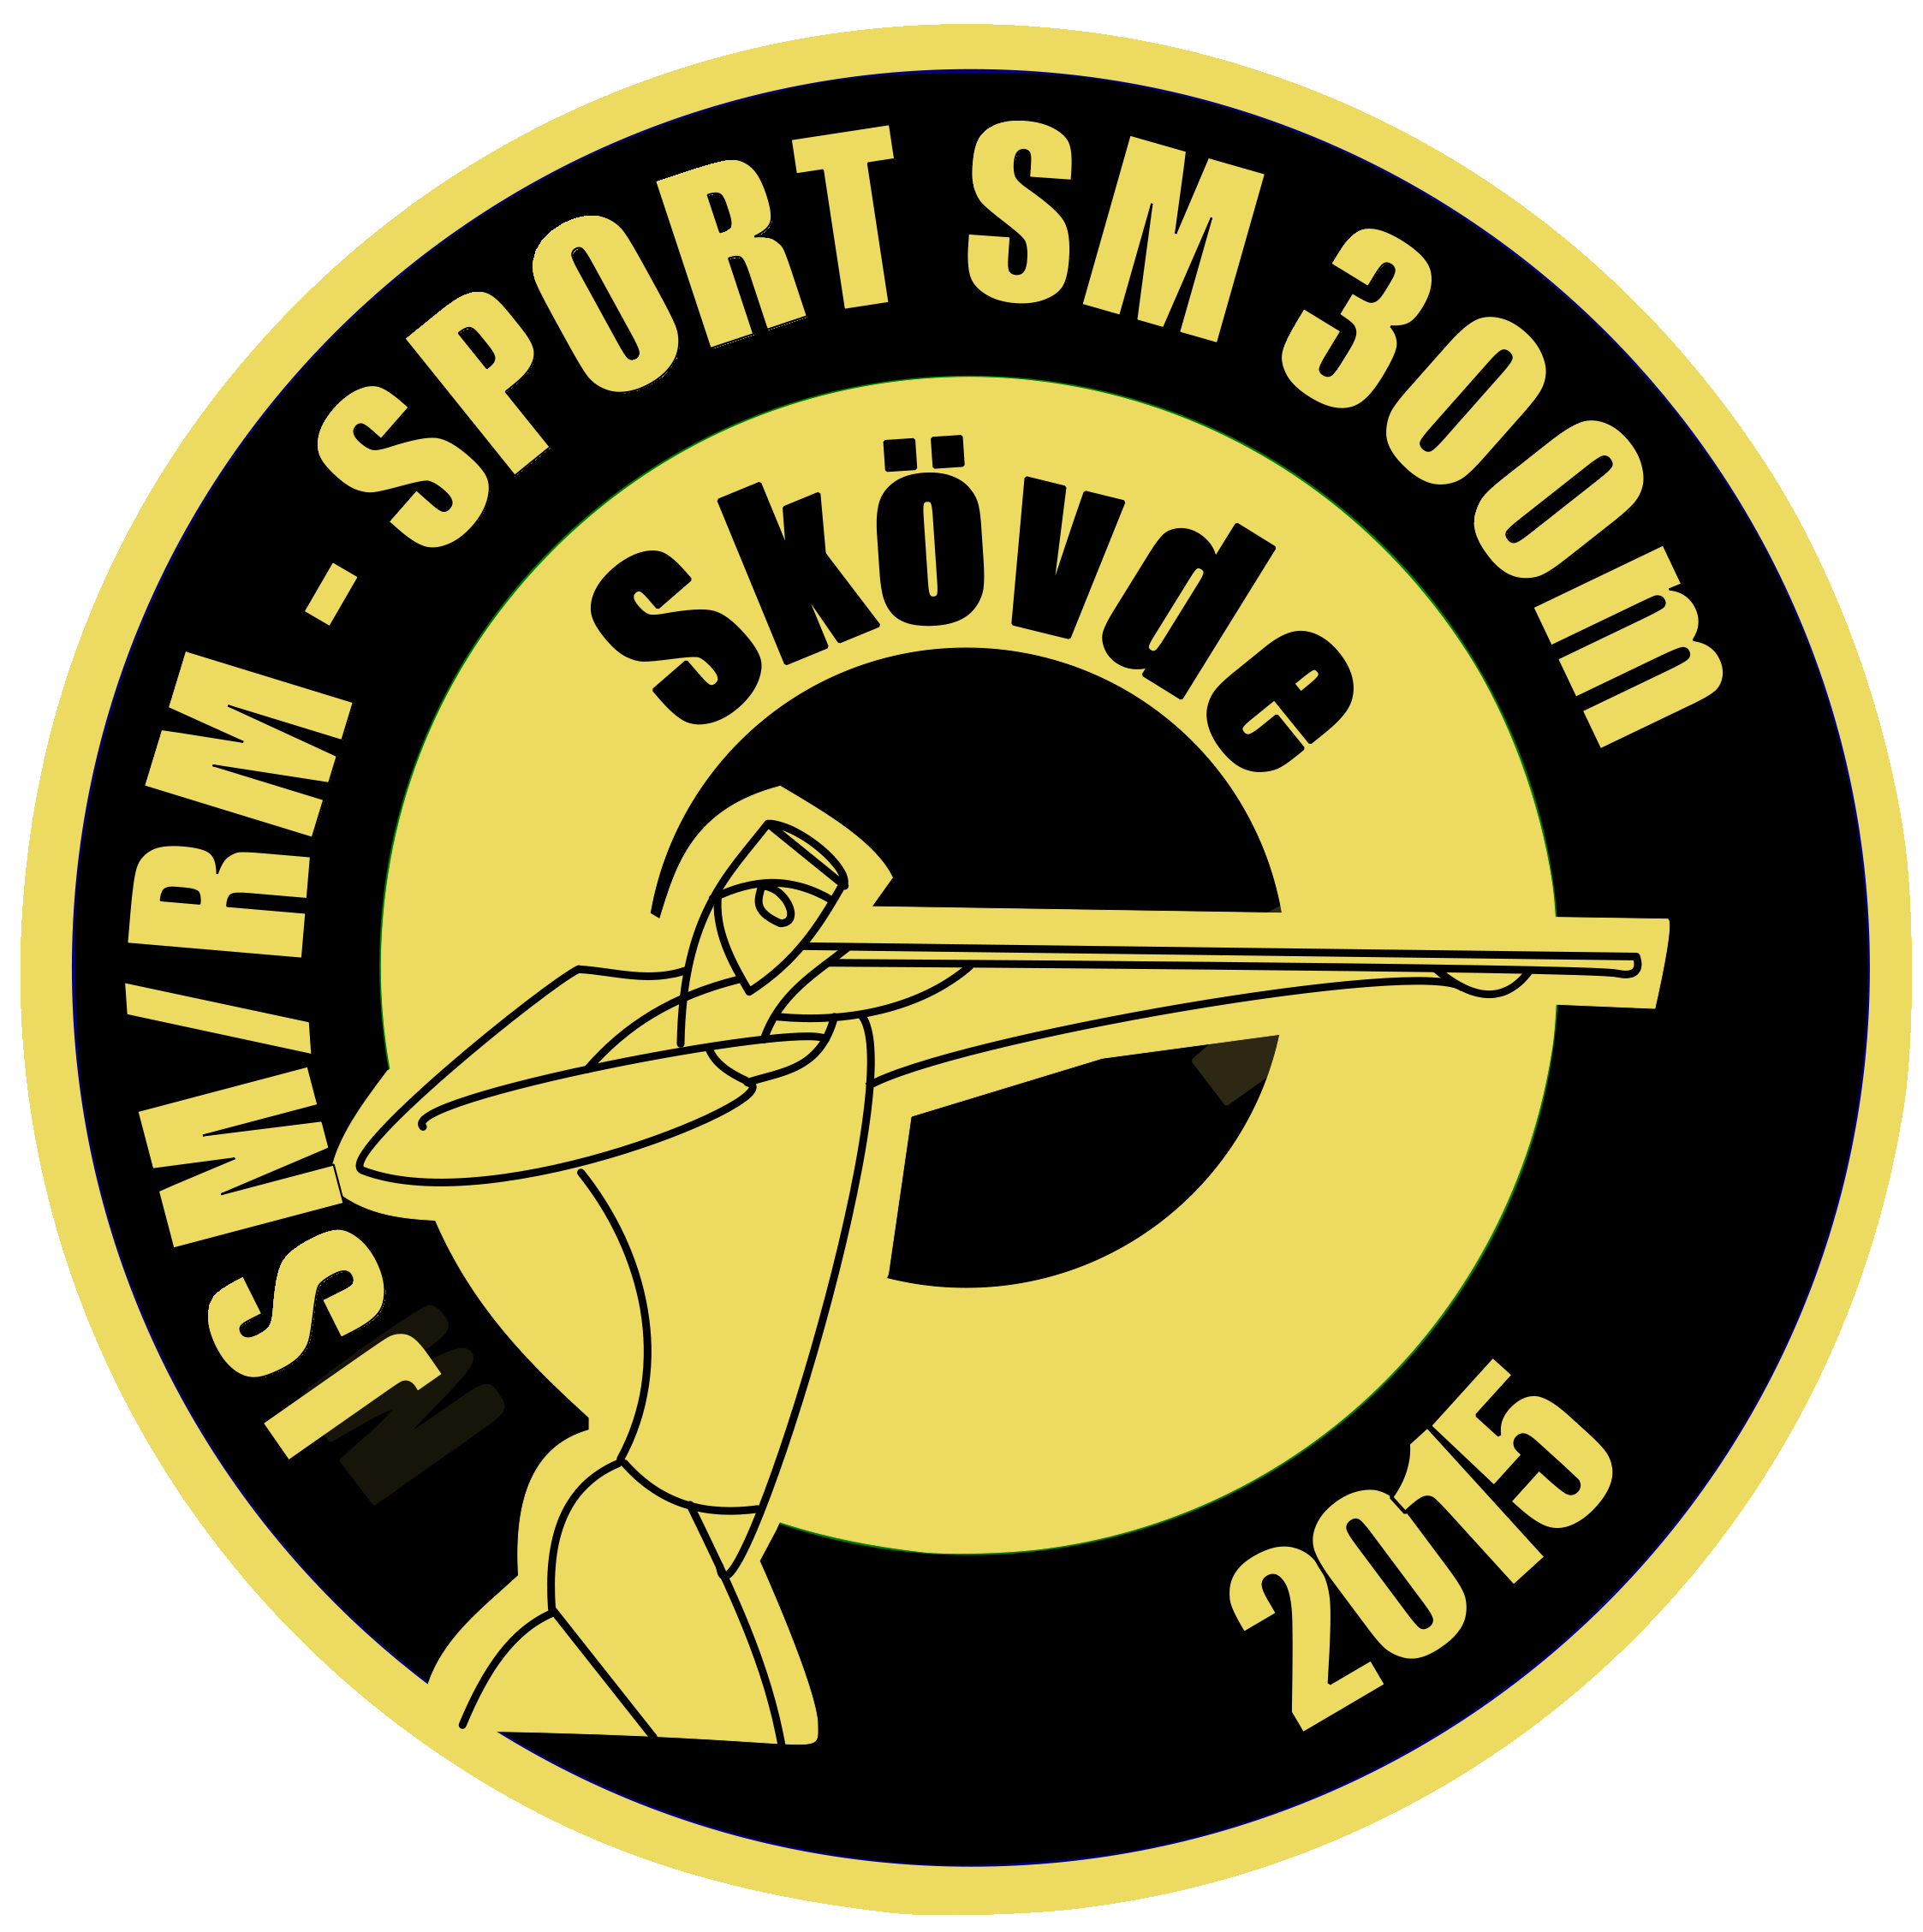 JSM 2015 logga